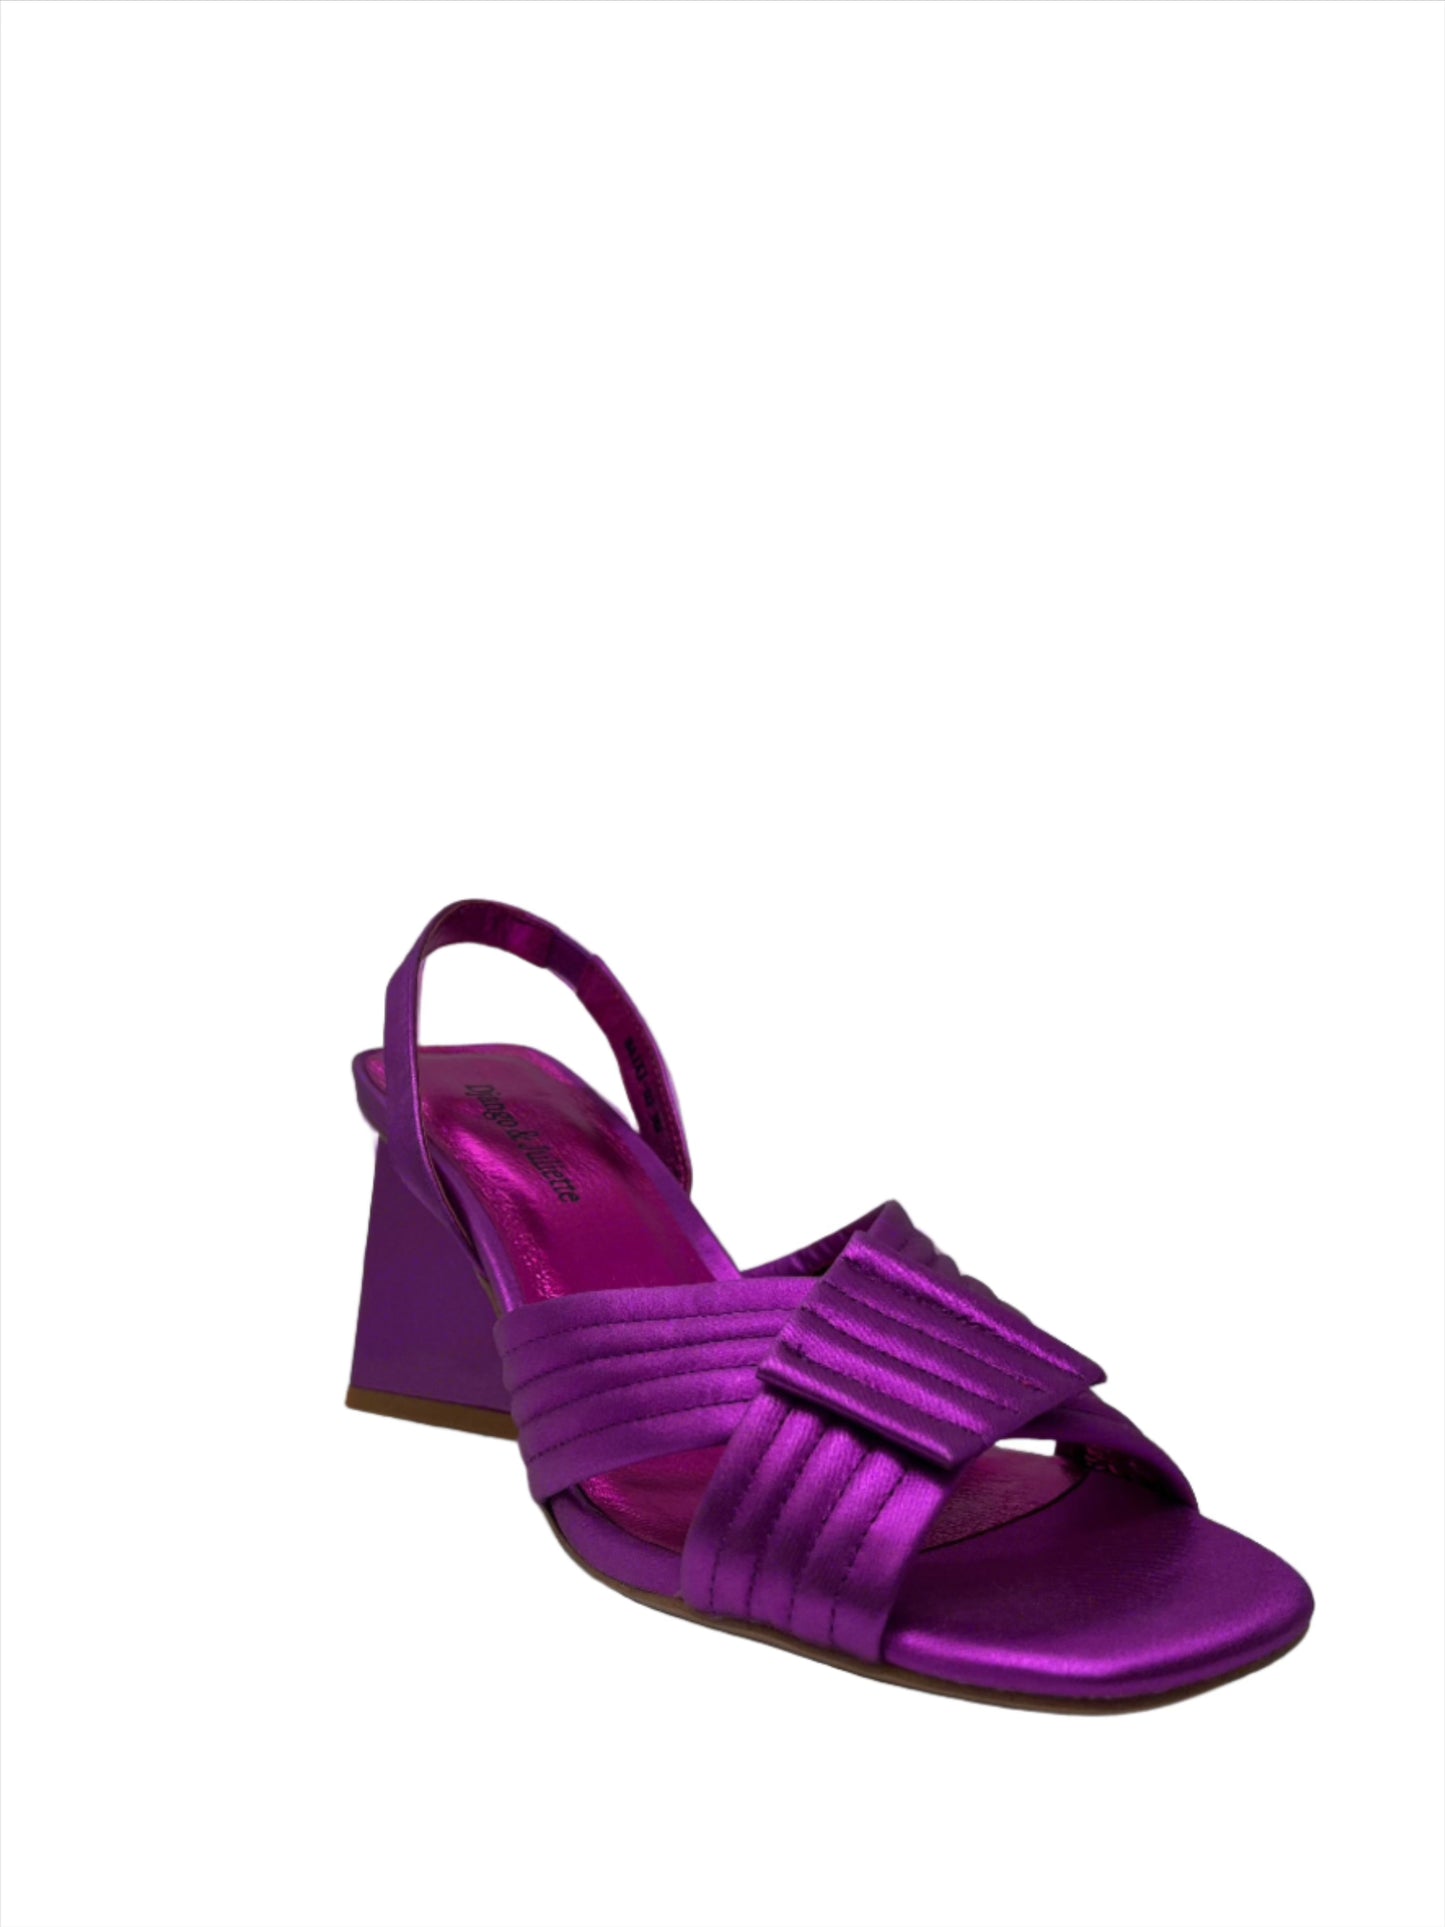 HAIKI LEATHER SATIN HEEL - DJANGO AND JULIETTE - satin heel, womens footwear - Stomp Shoes Darwin